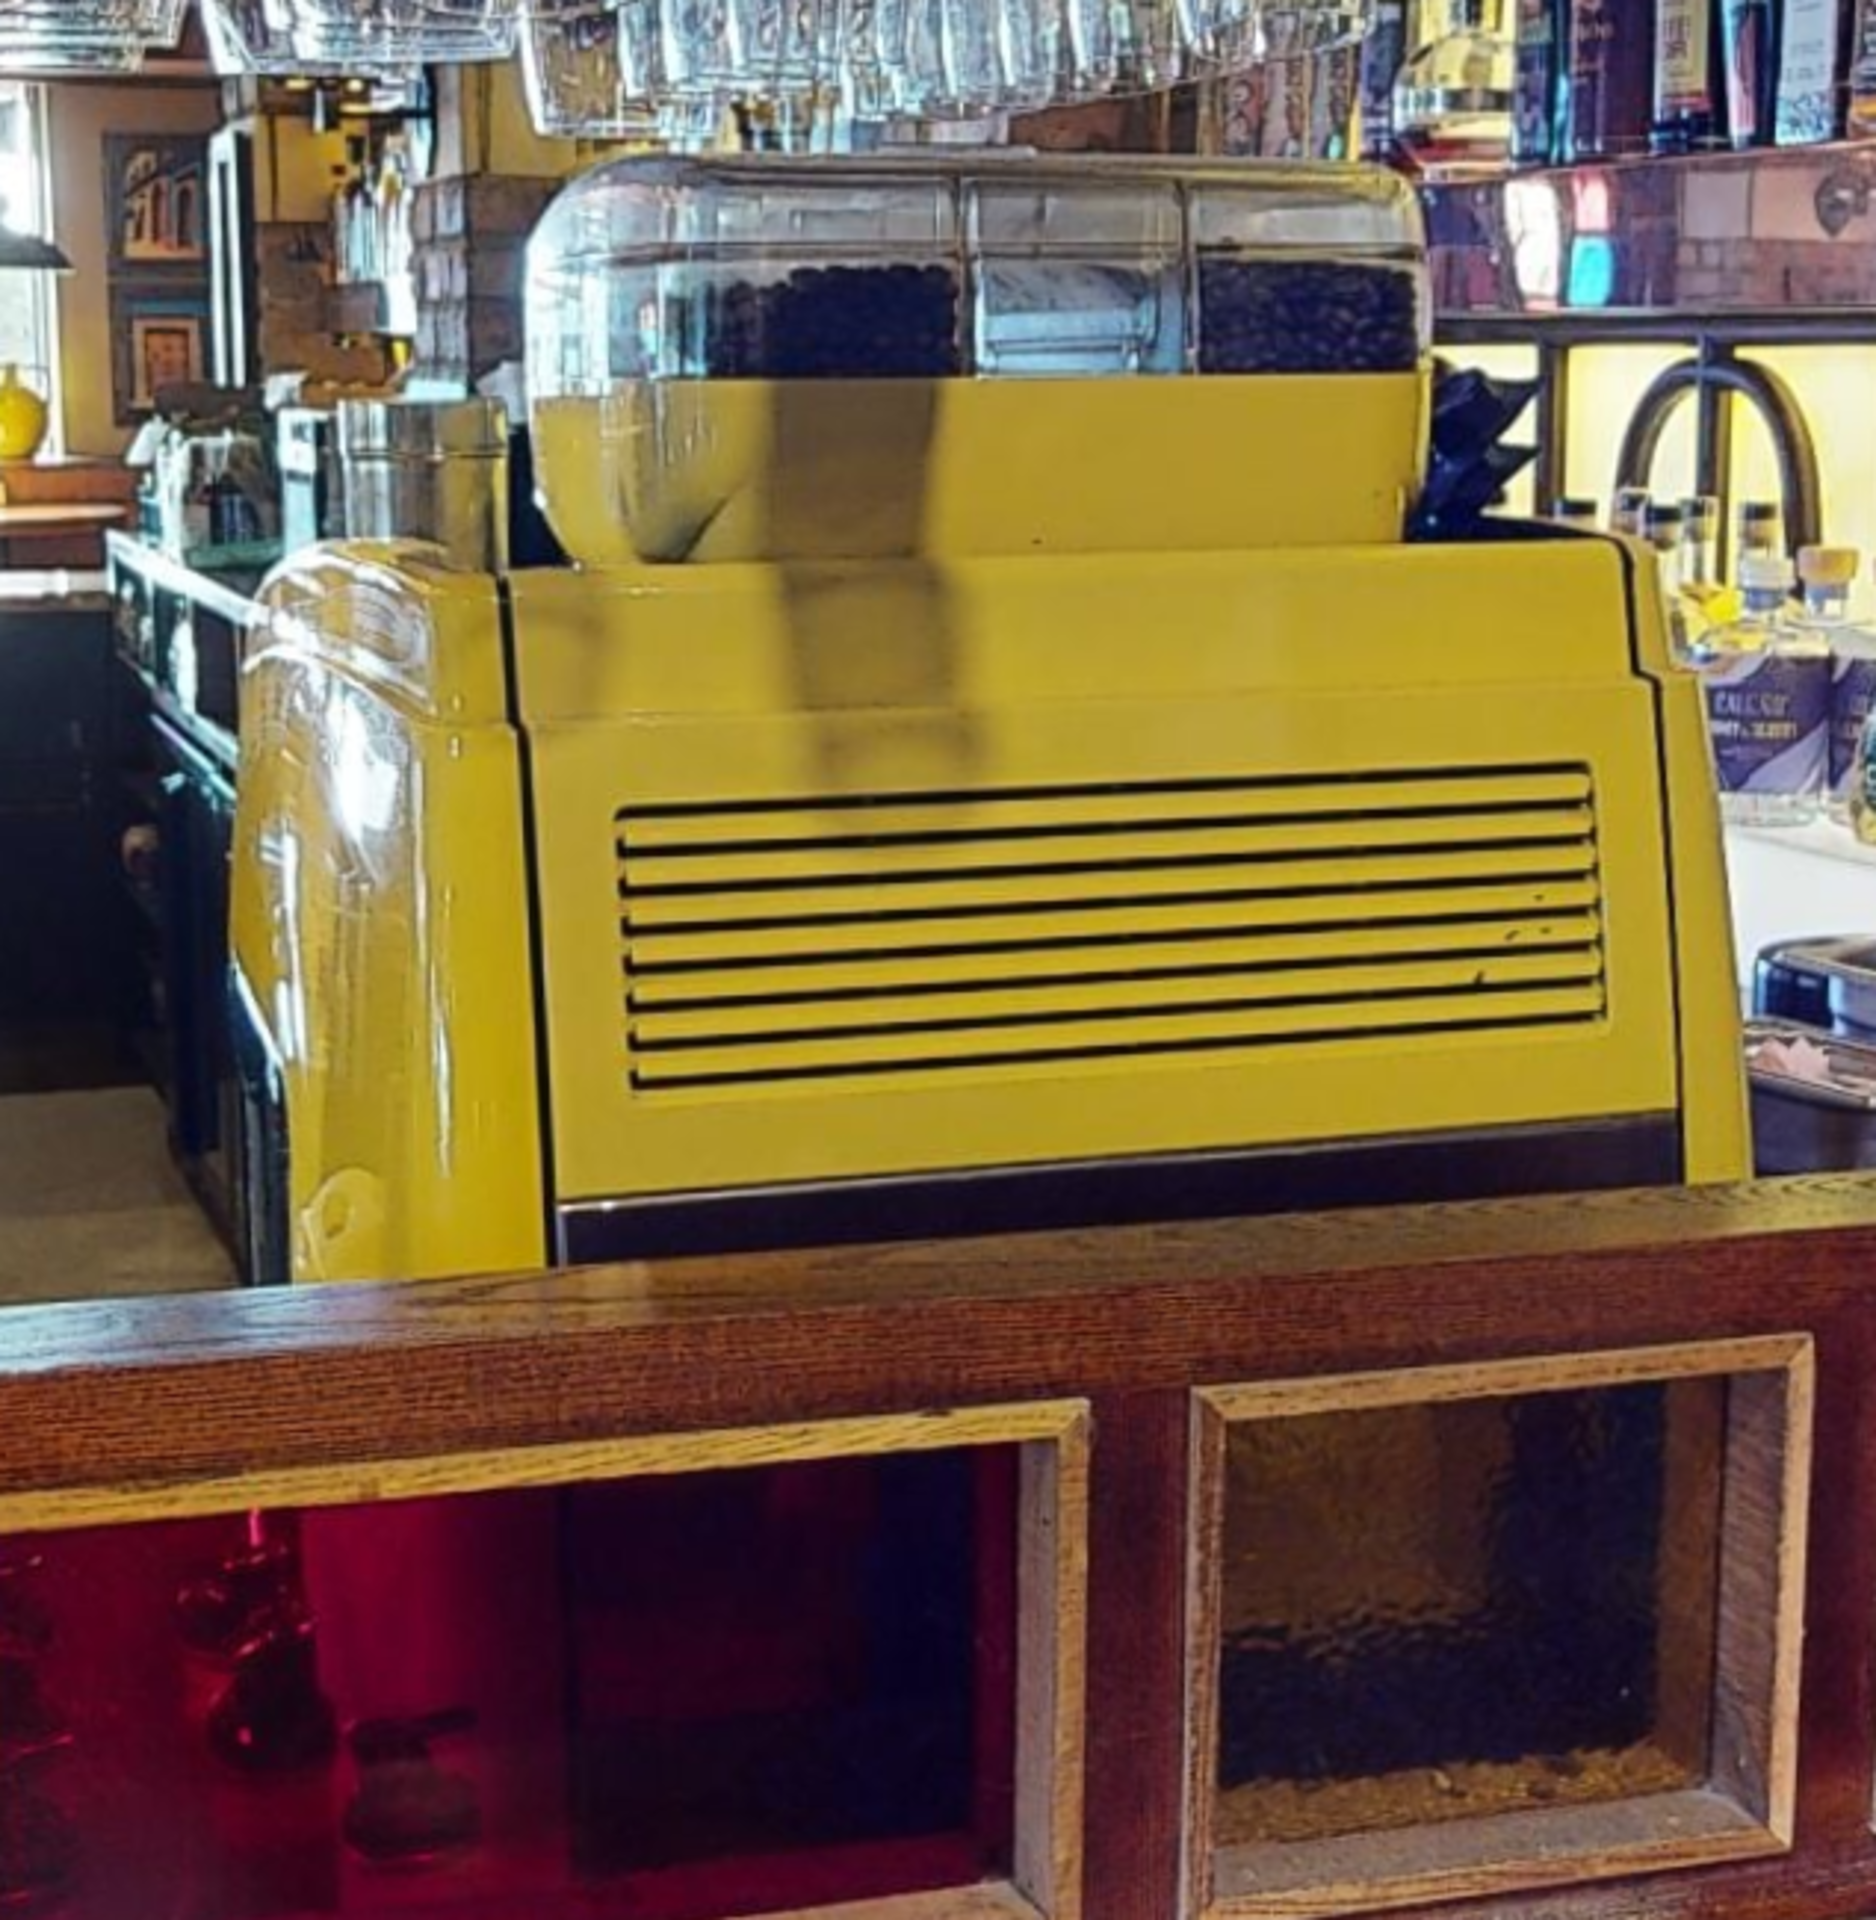 1 x La Cimbali S39 Barsystem Espresso Bean to Cup Coffee Machine - Bright Yellow Finish - 240V Plug - Image 3 of 14